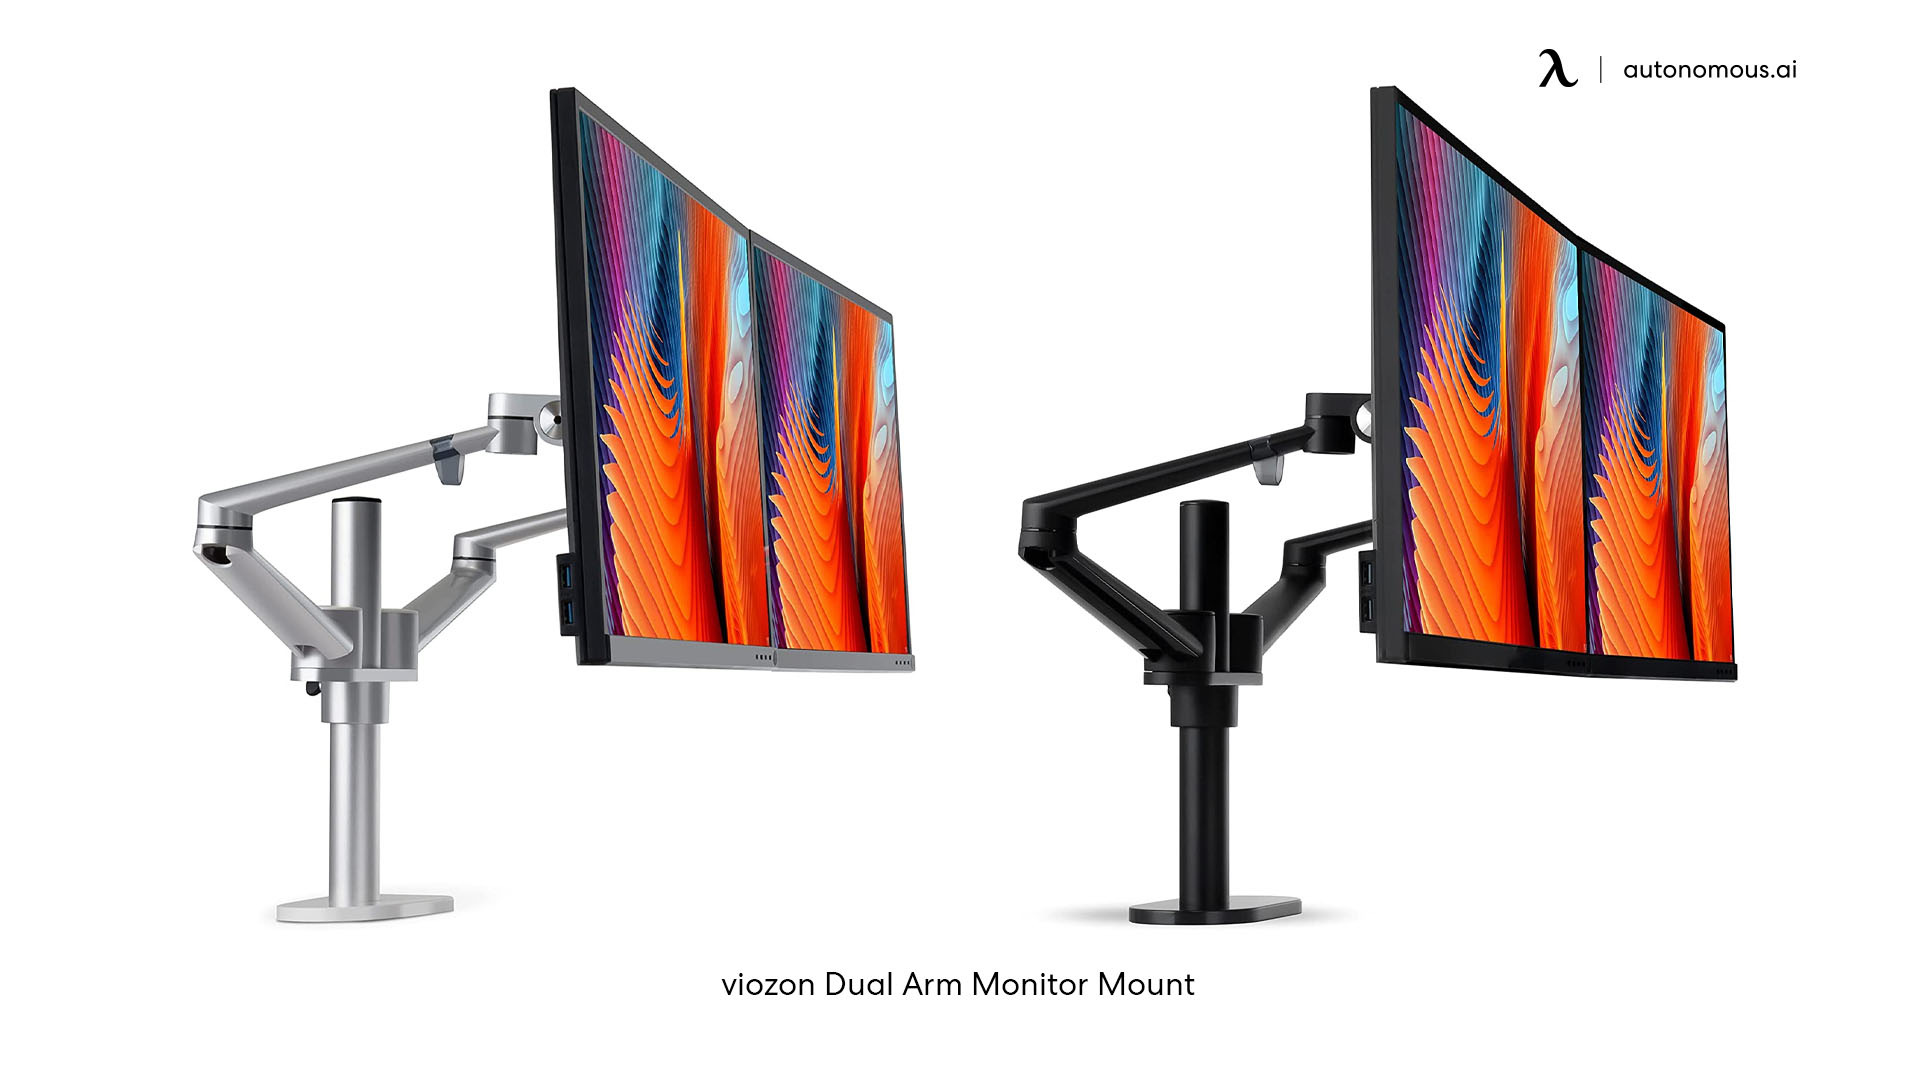 viozon Dual Arm Monitor Mount